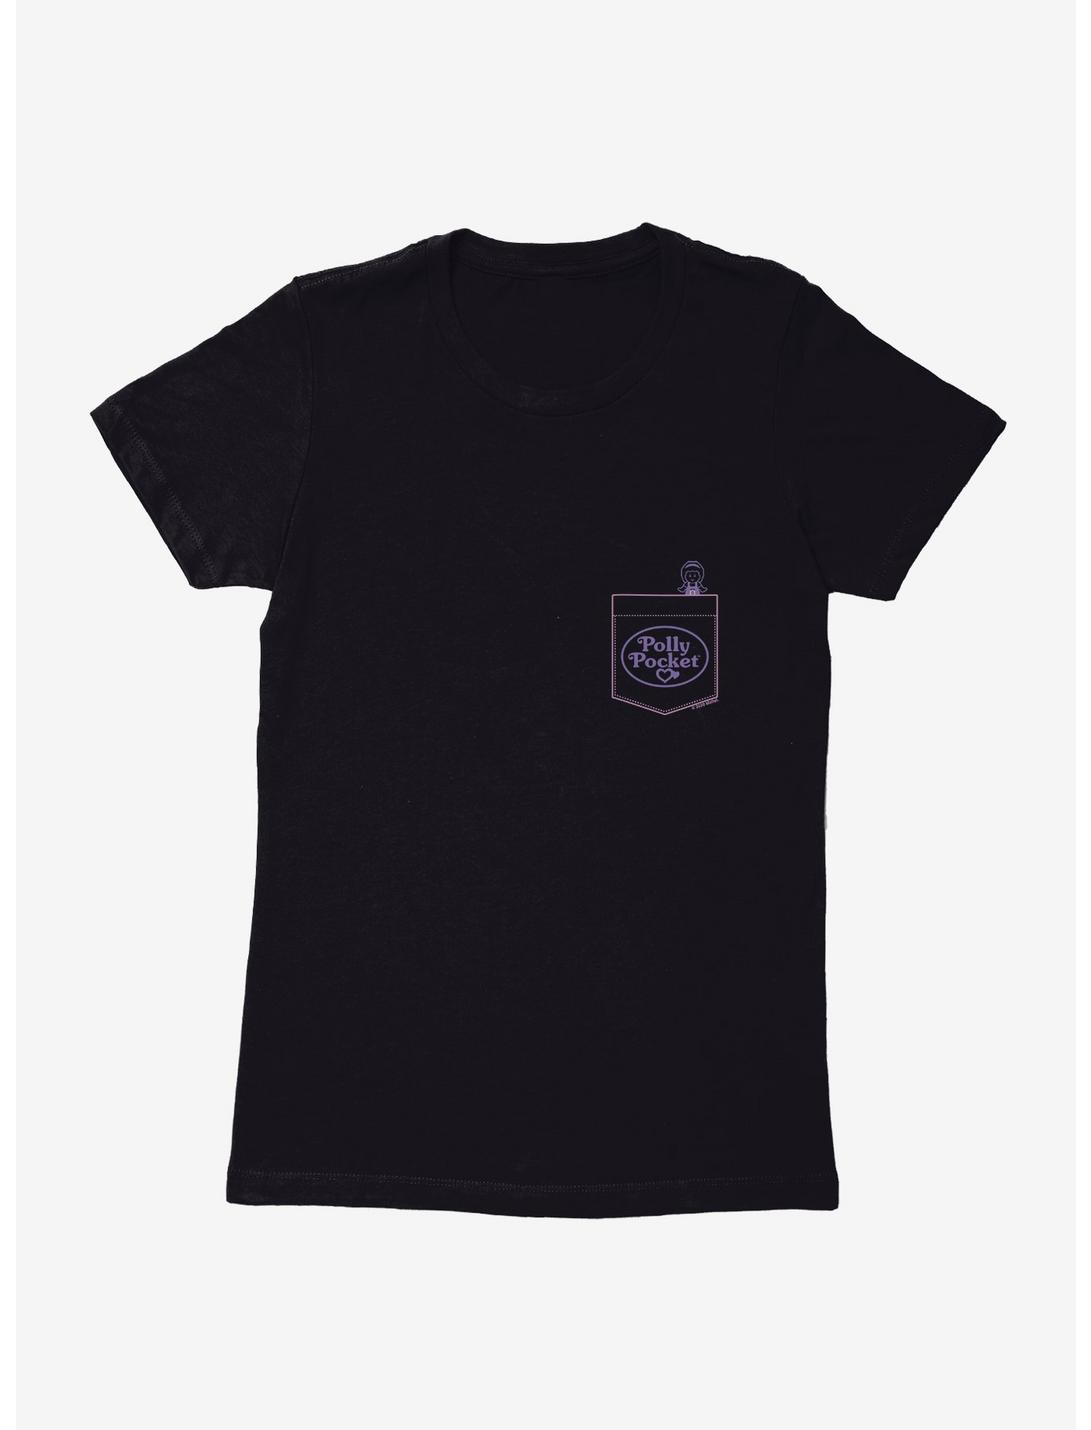 Polly Pocket Faux Pocket Icon Womens T-Shirt, , hi-res